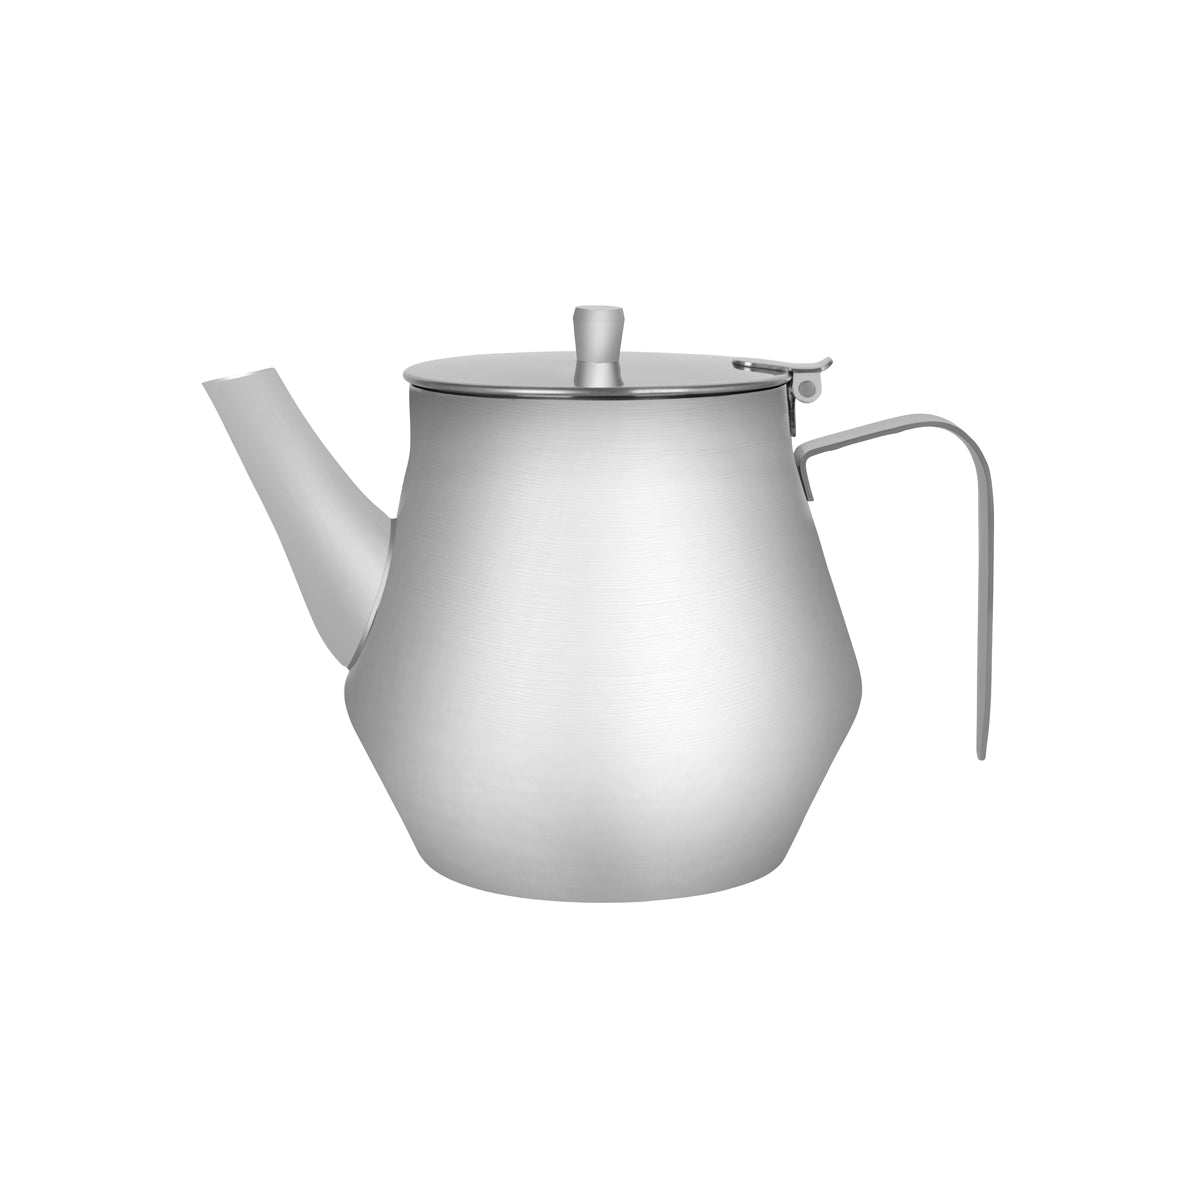 Primula Stainless Steel Universal Tea Infuser